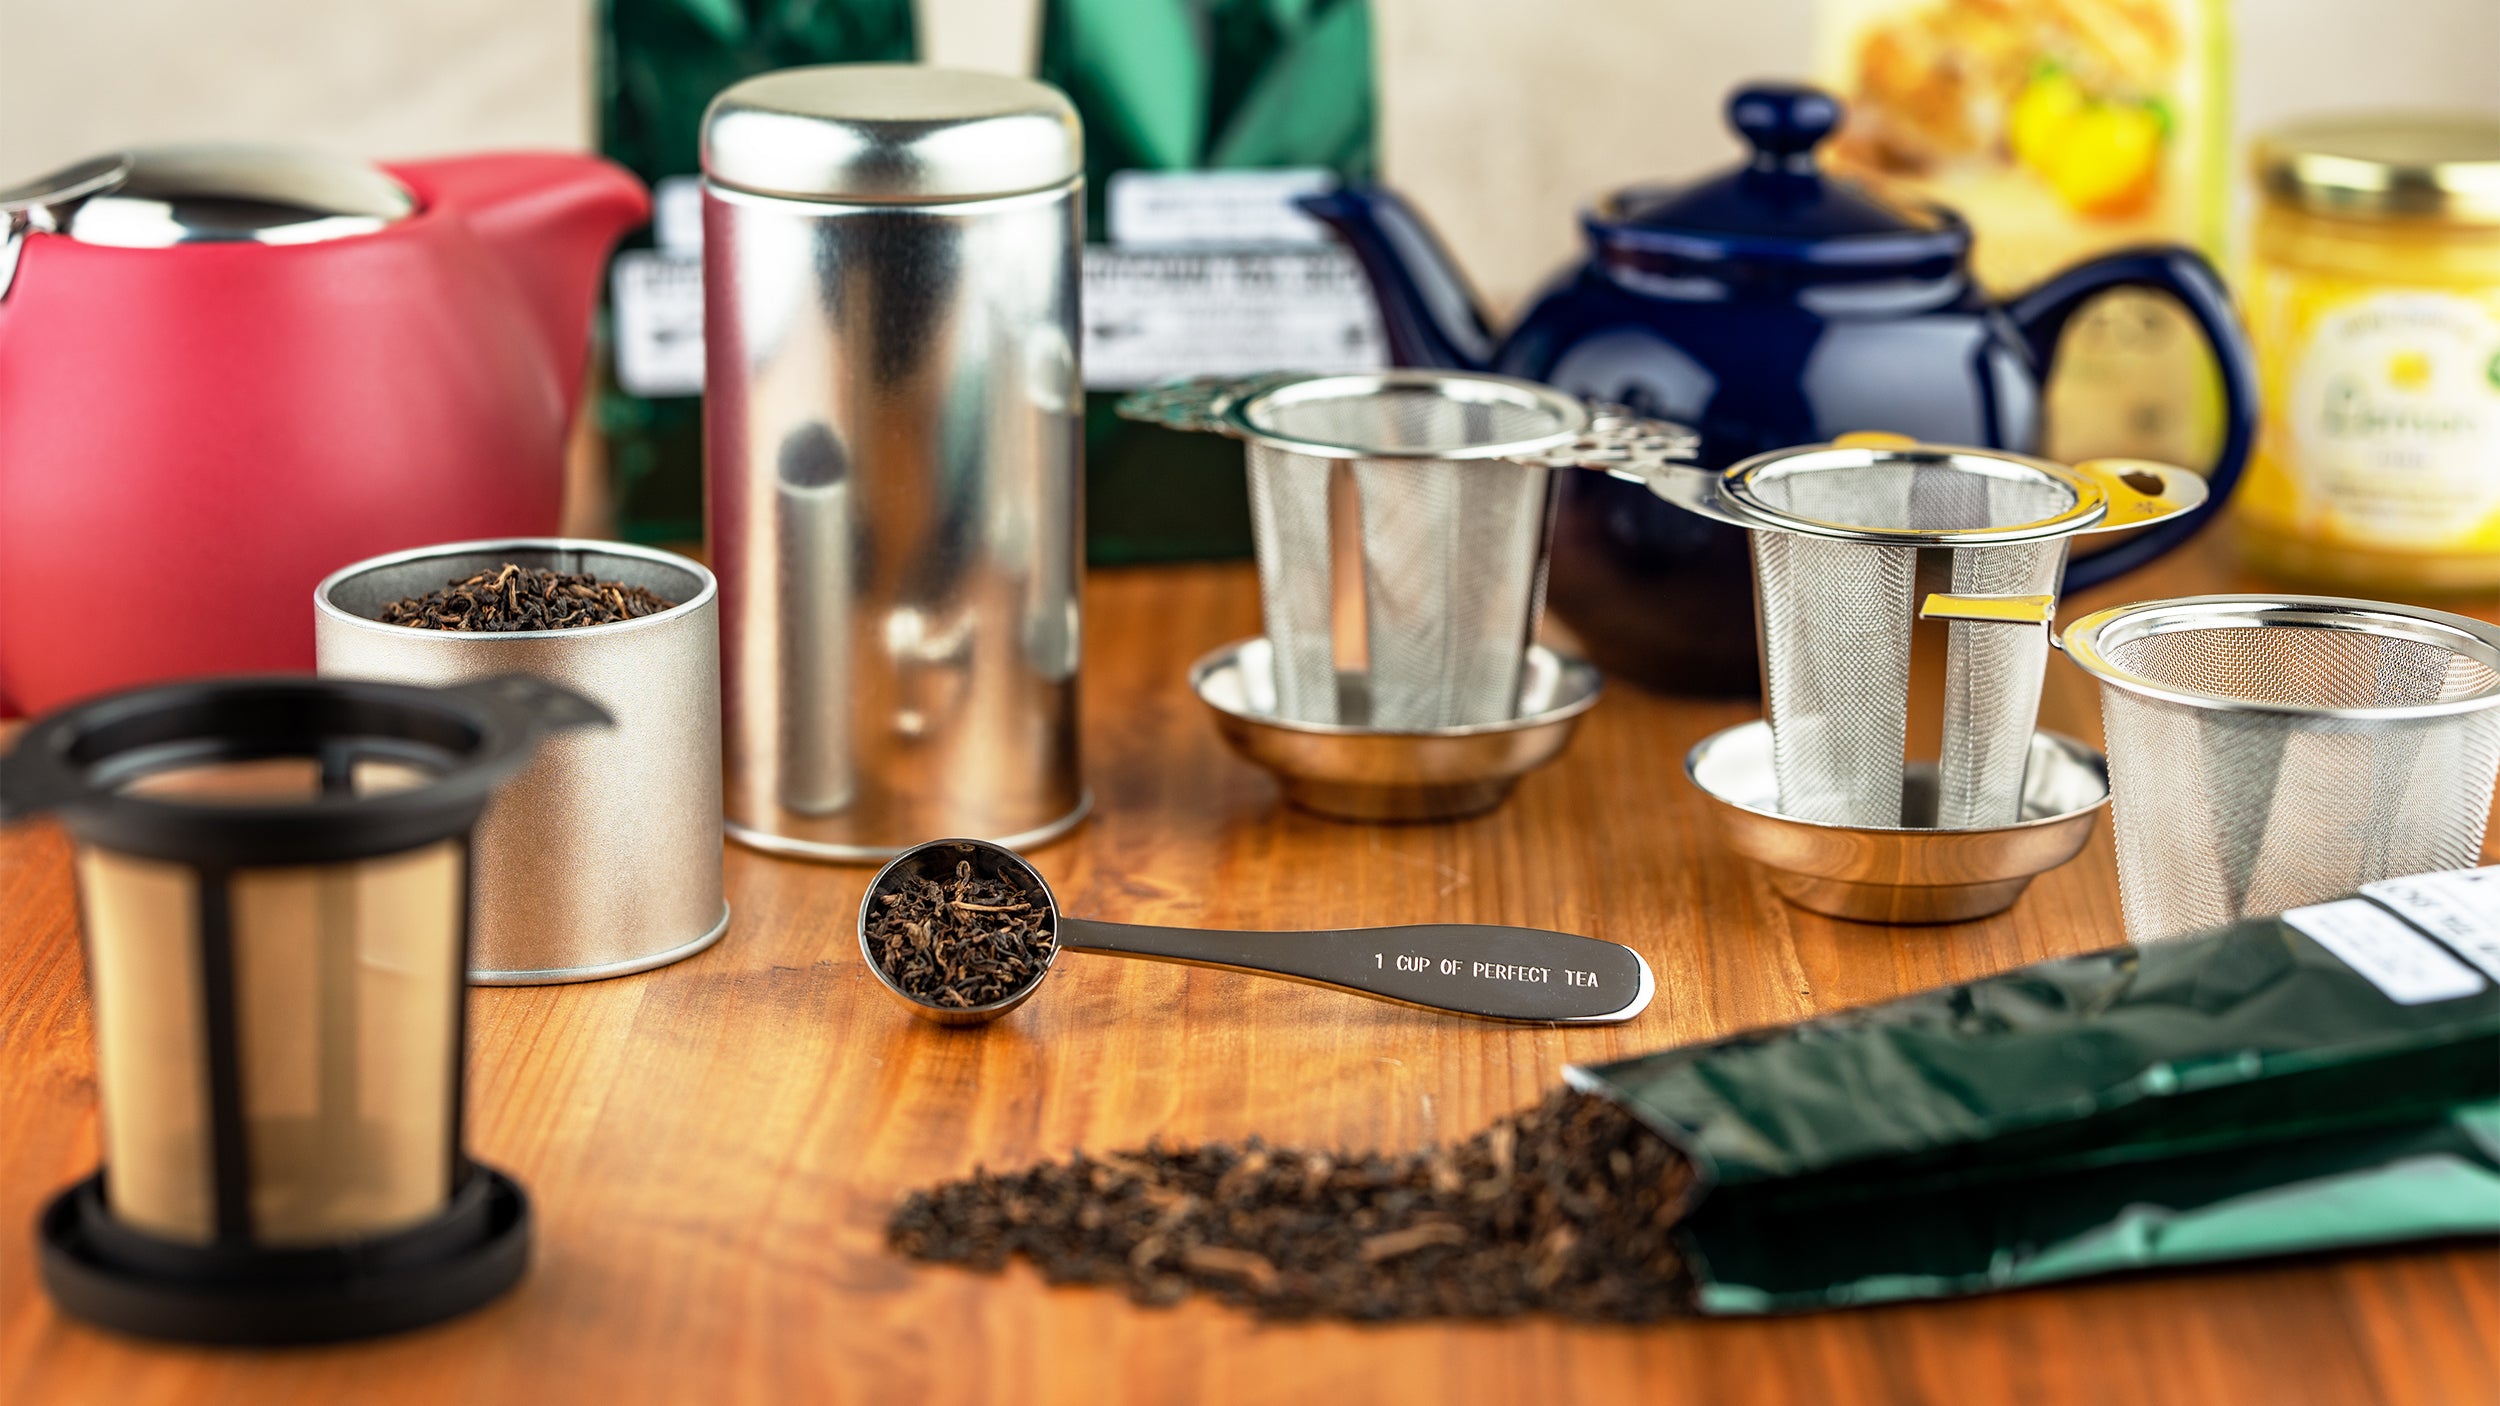 Uptown Tea Shop - Premium Loose Leaf Teas and Accessories